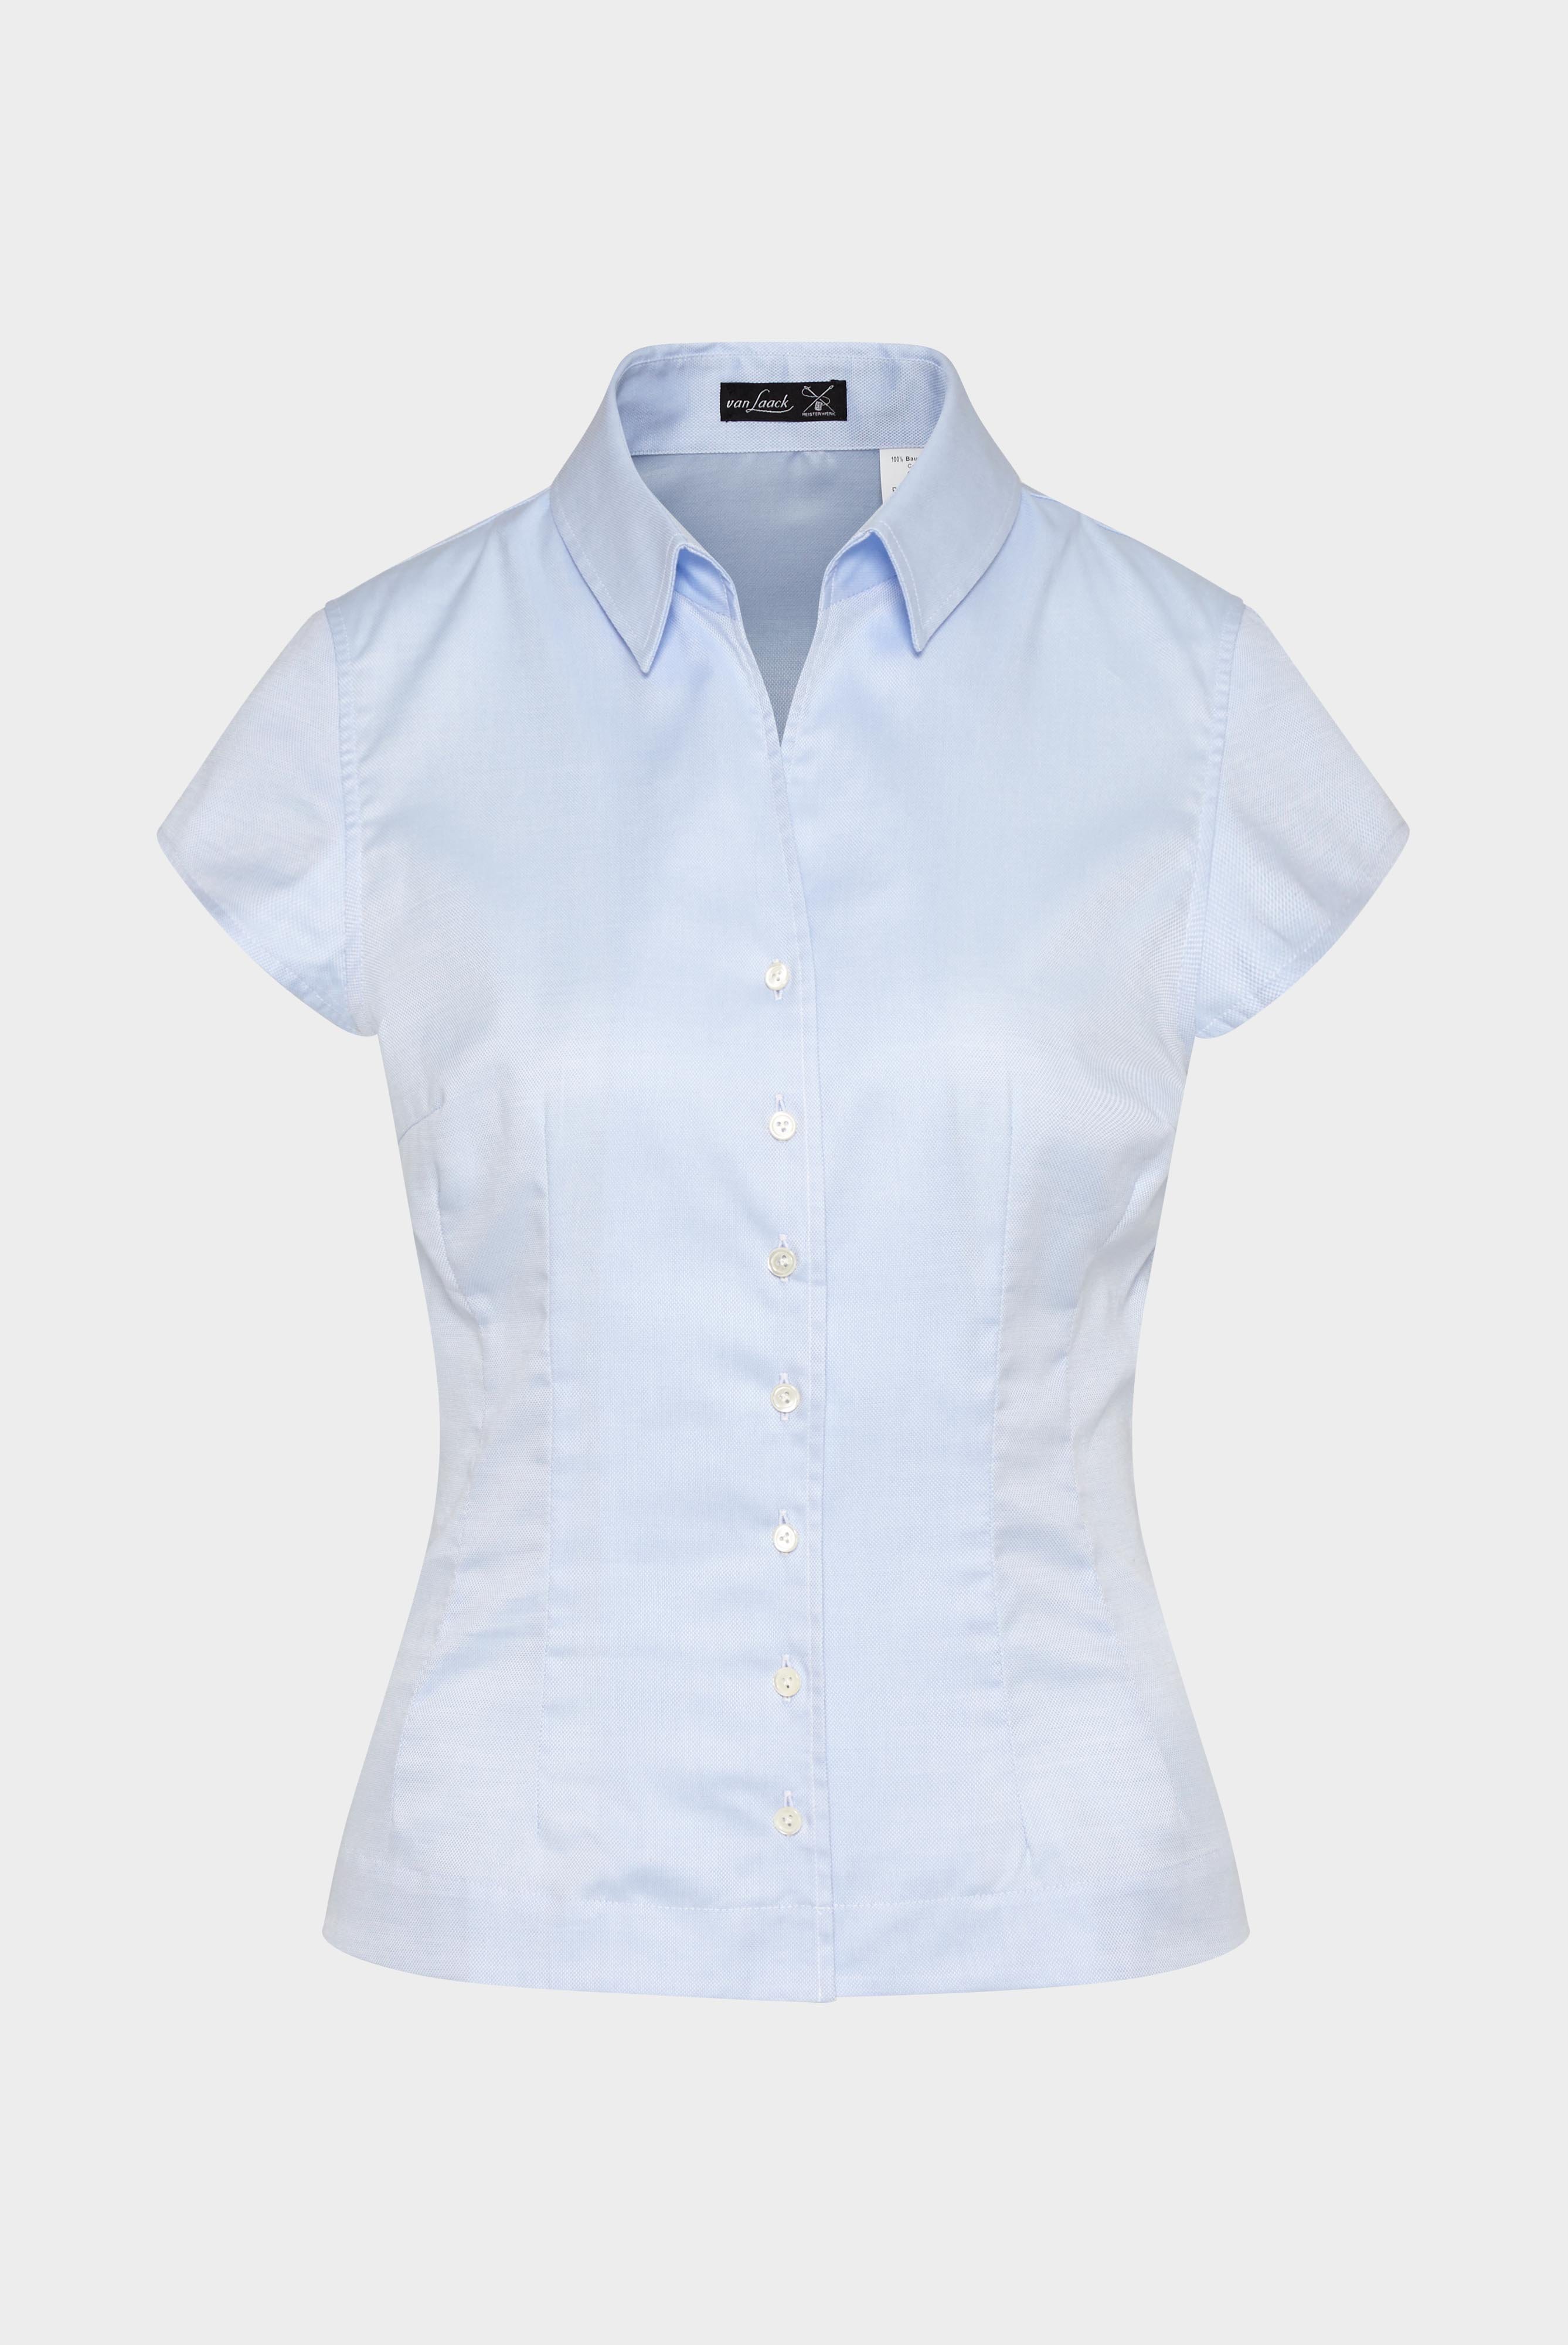 Business Blouses+Natté Short Sleeve Shirt Blouse+05.5029.73.130532.720.36